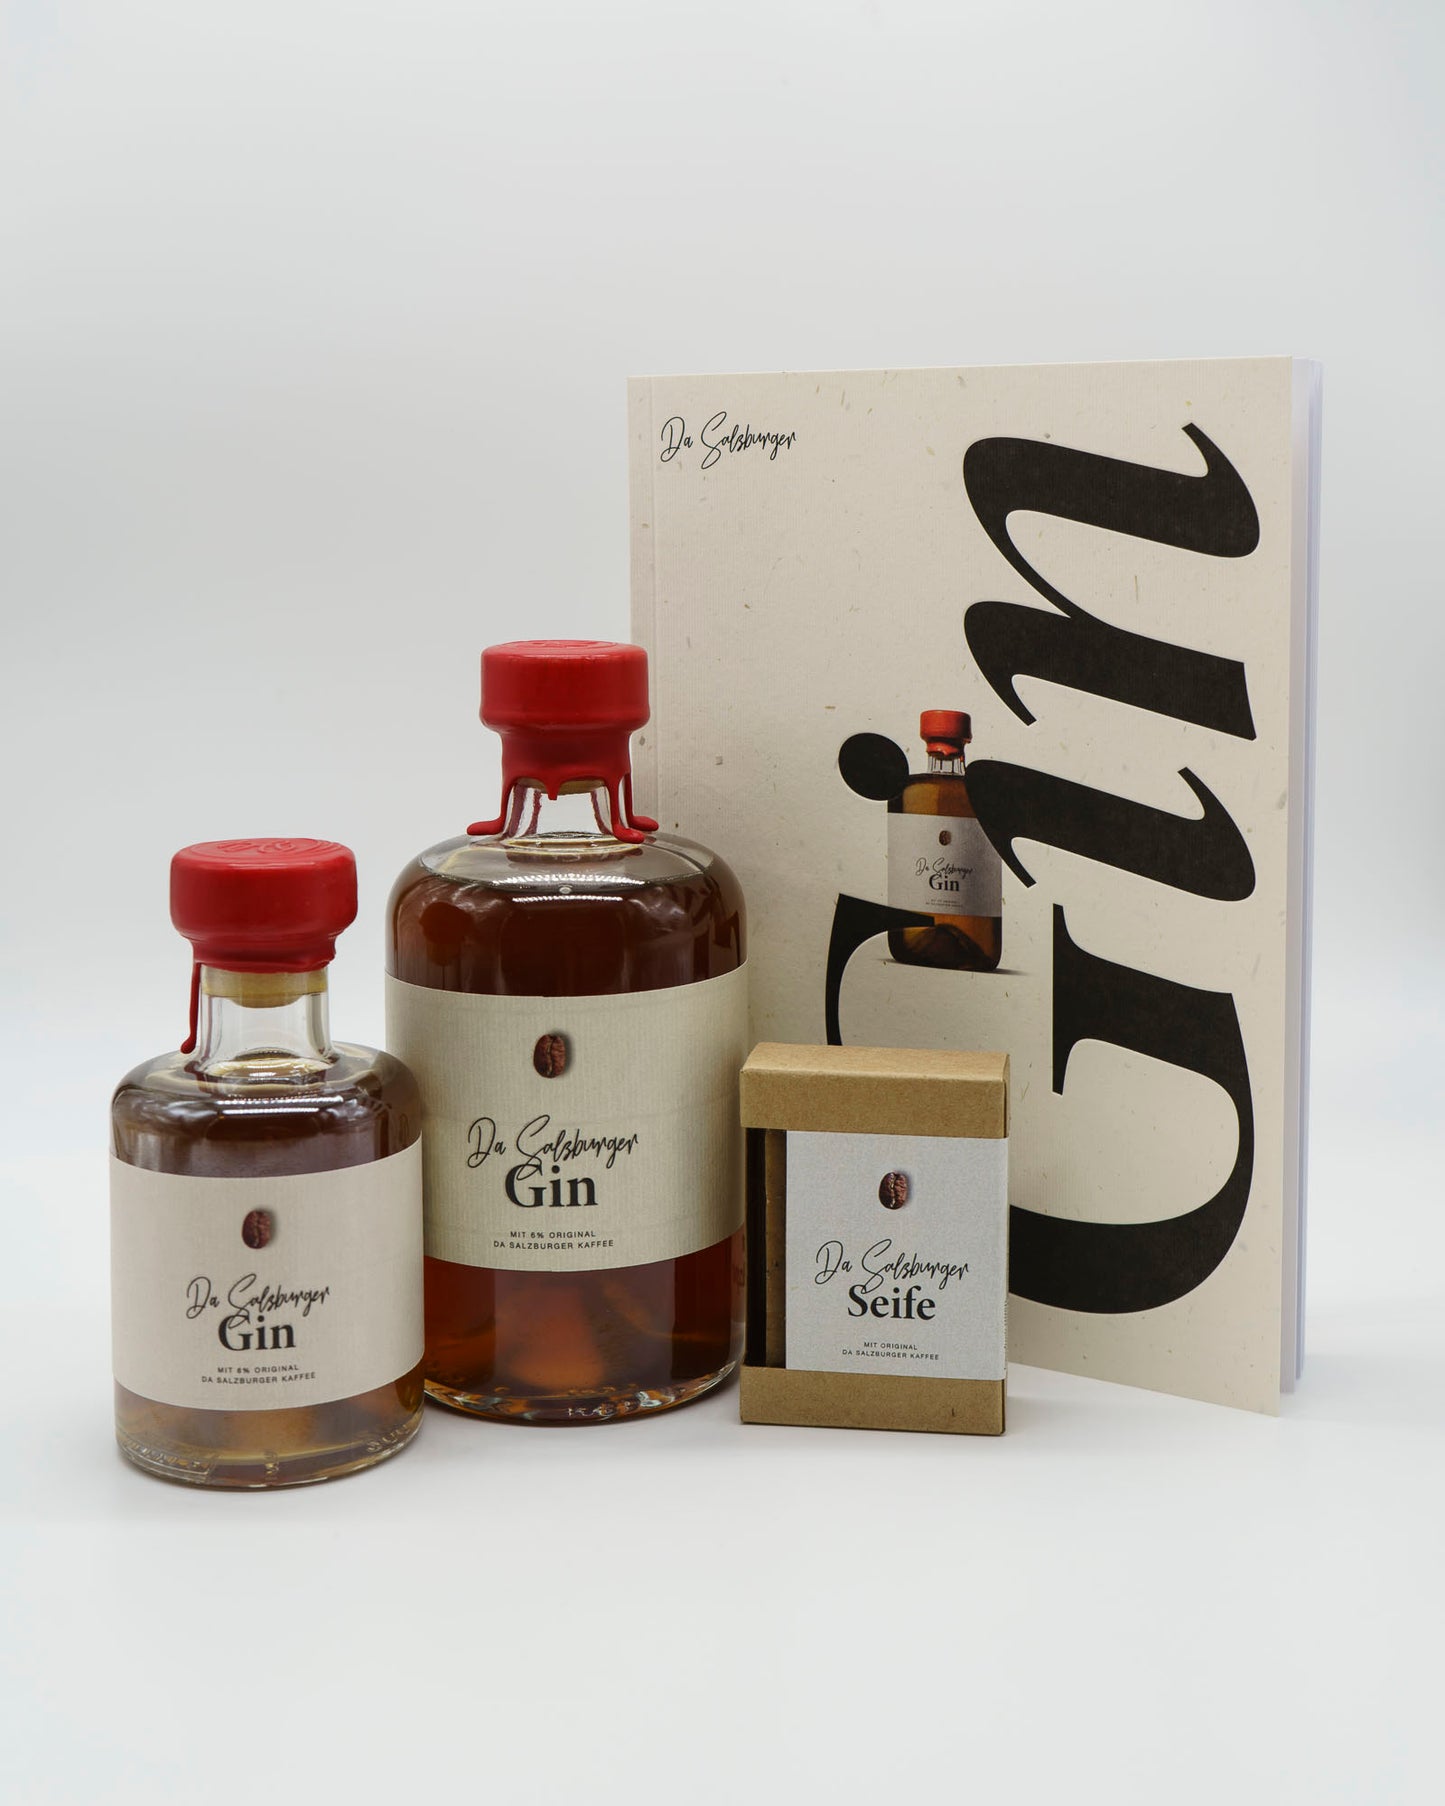 Da Salzburger® Coffee Gin Package